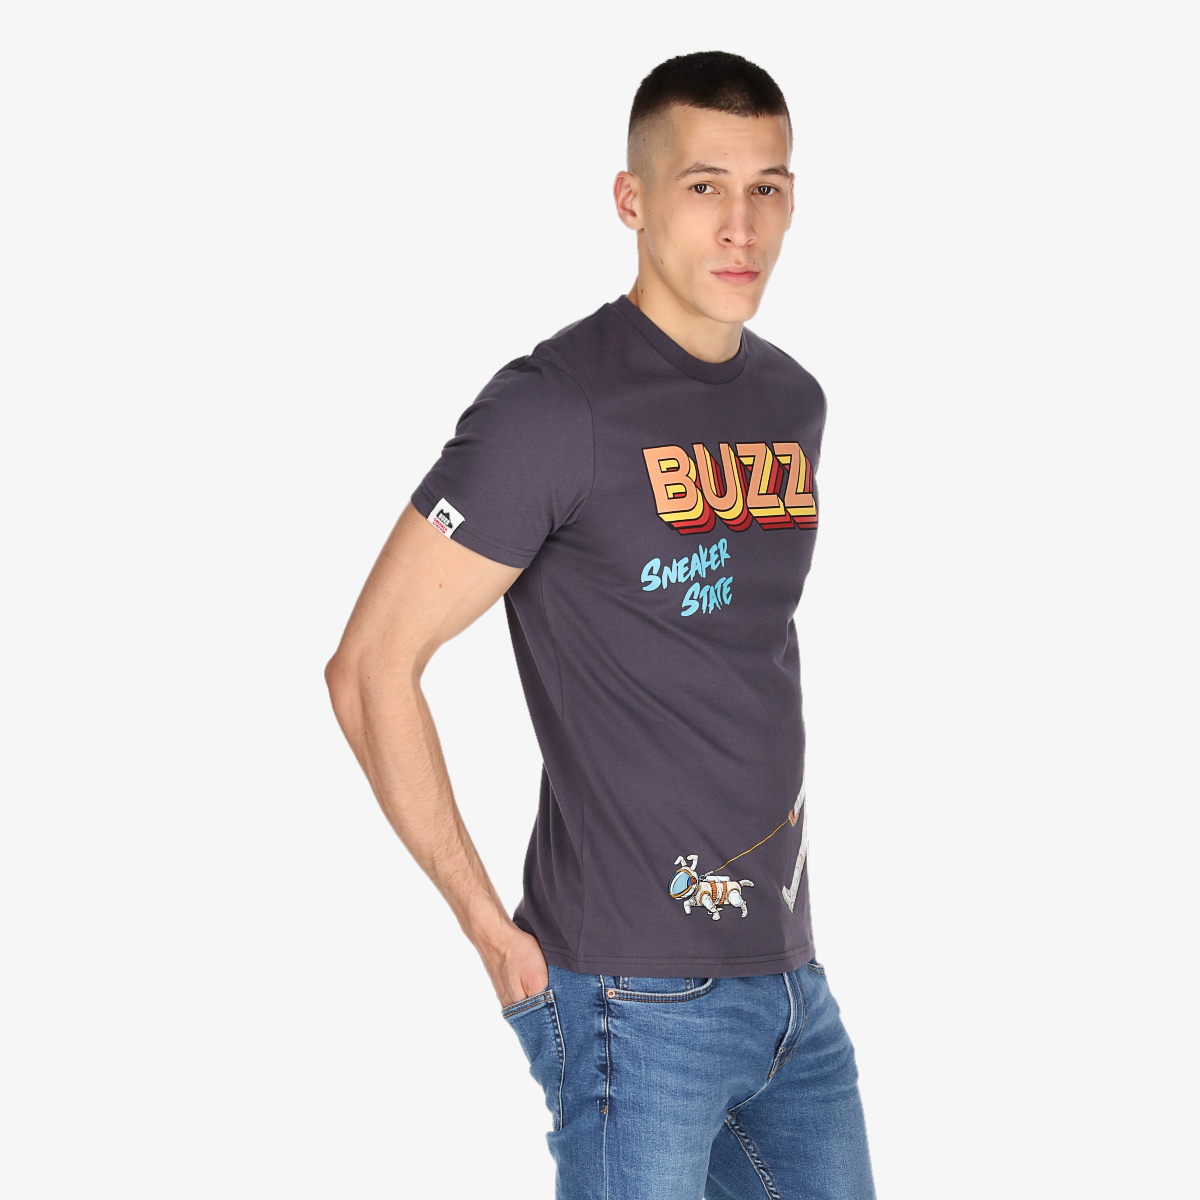 BUZZ Тенискa SPACE T-SHIRT 